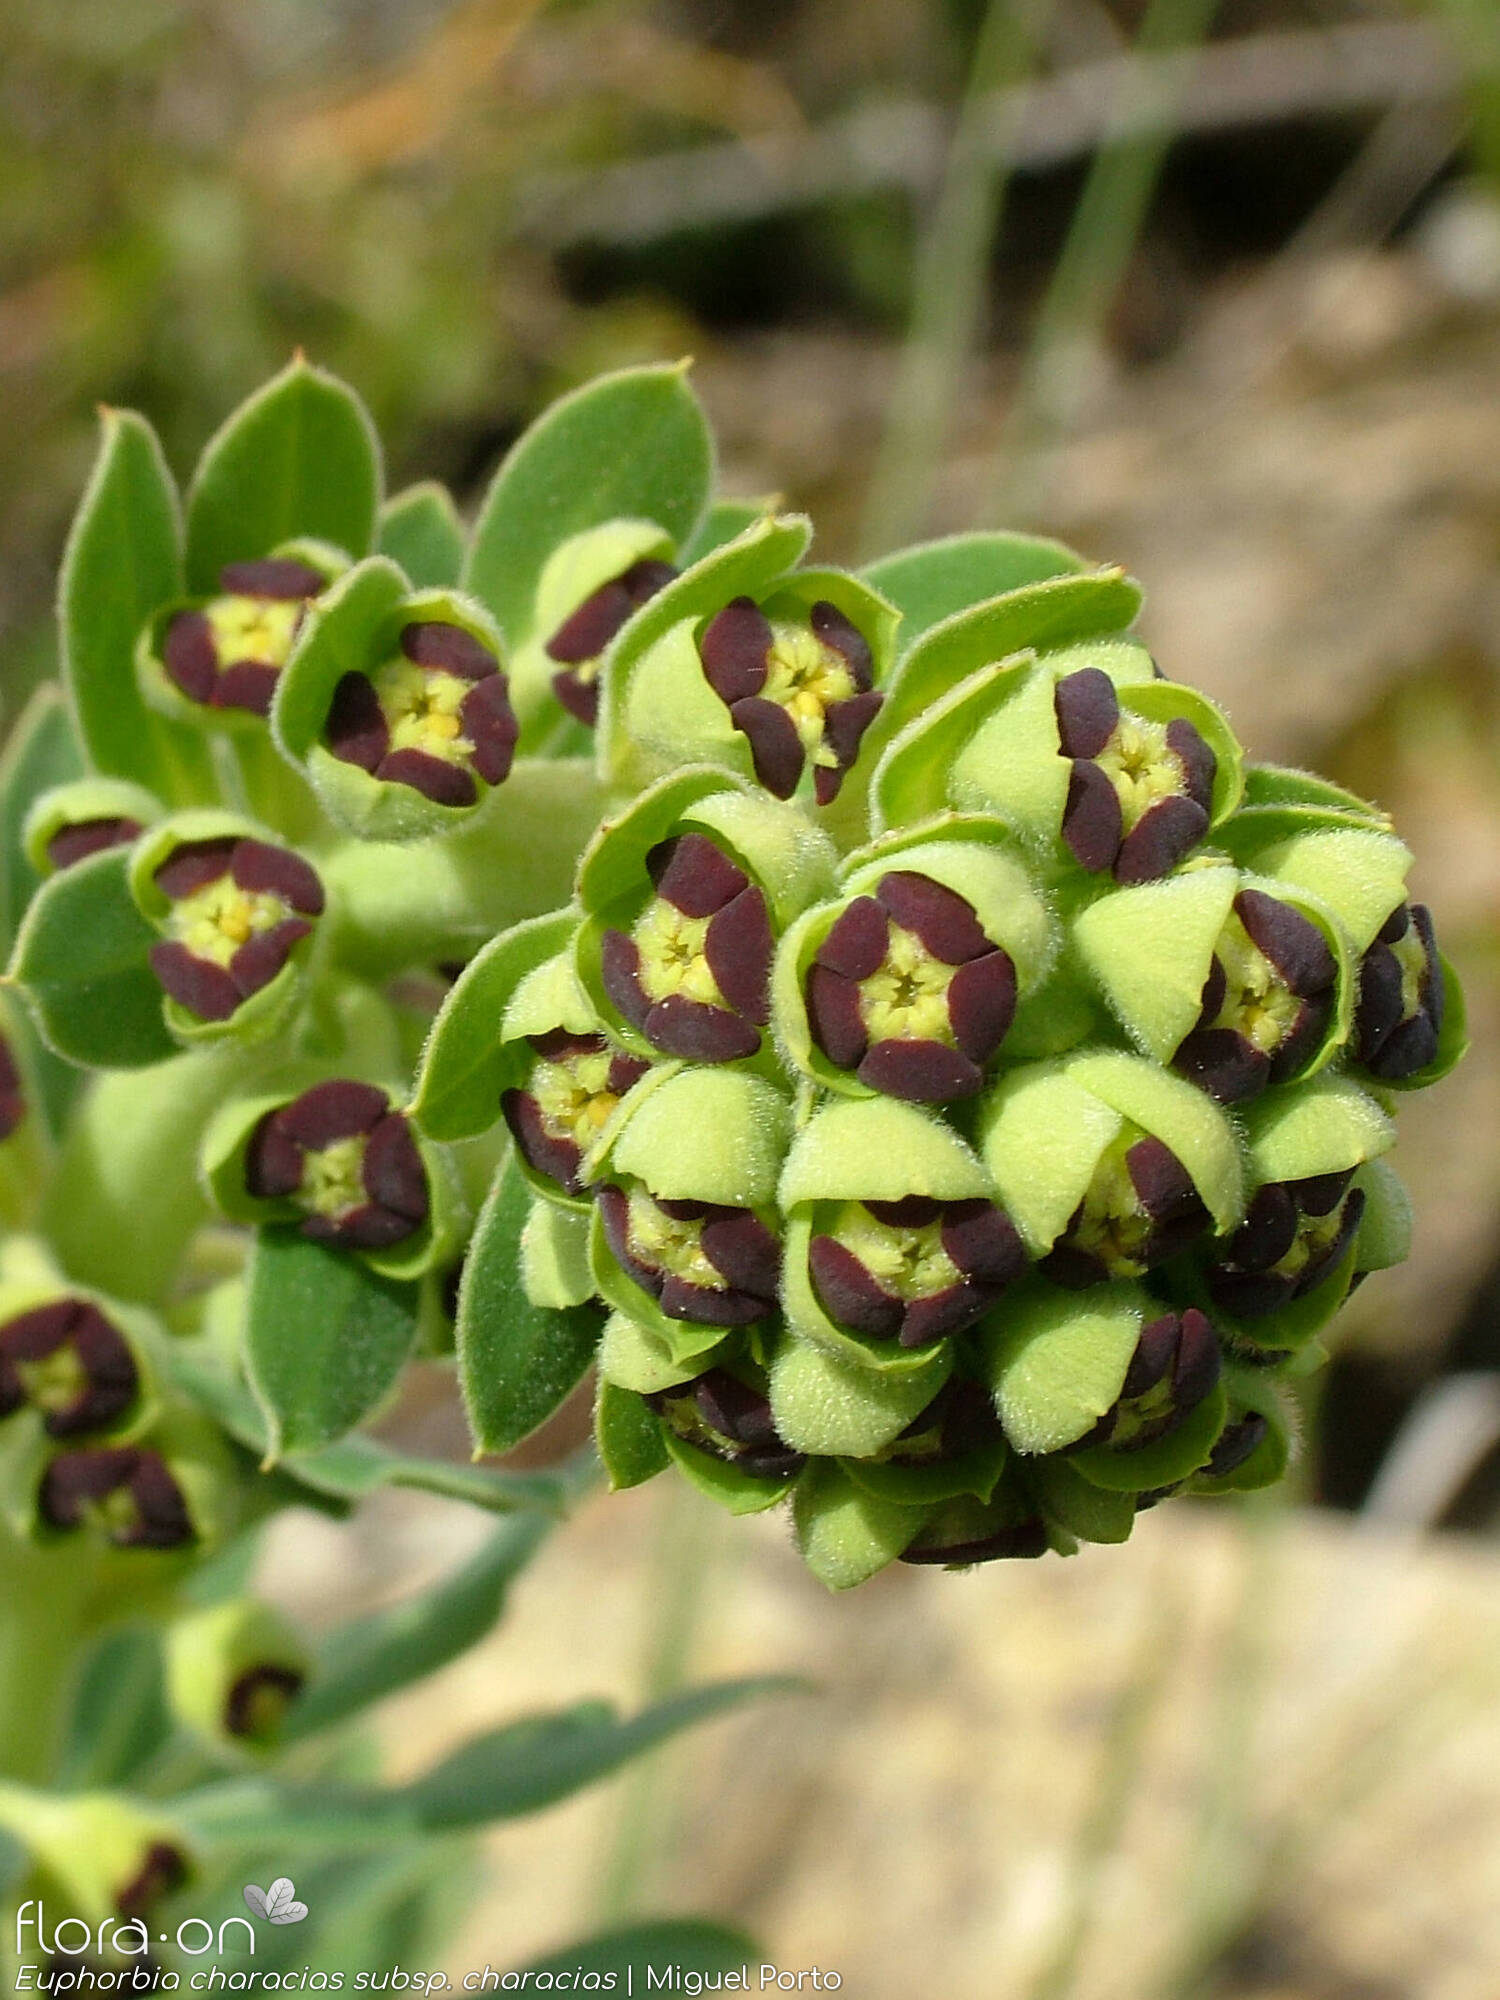 Euphorbia characias characias - Flor (geral) | Miguel Porto; CC BY-NC 4.0